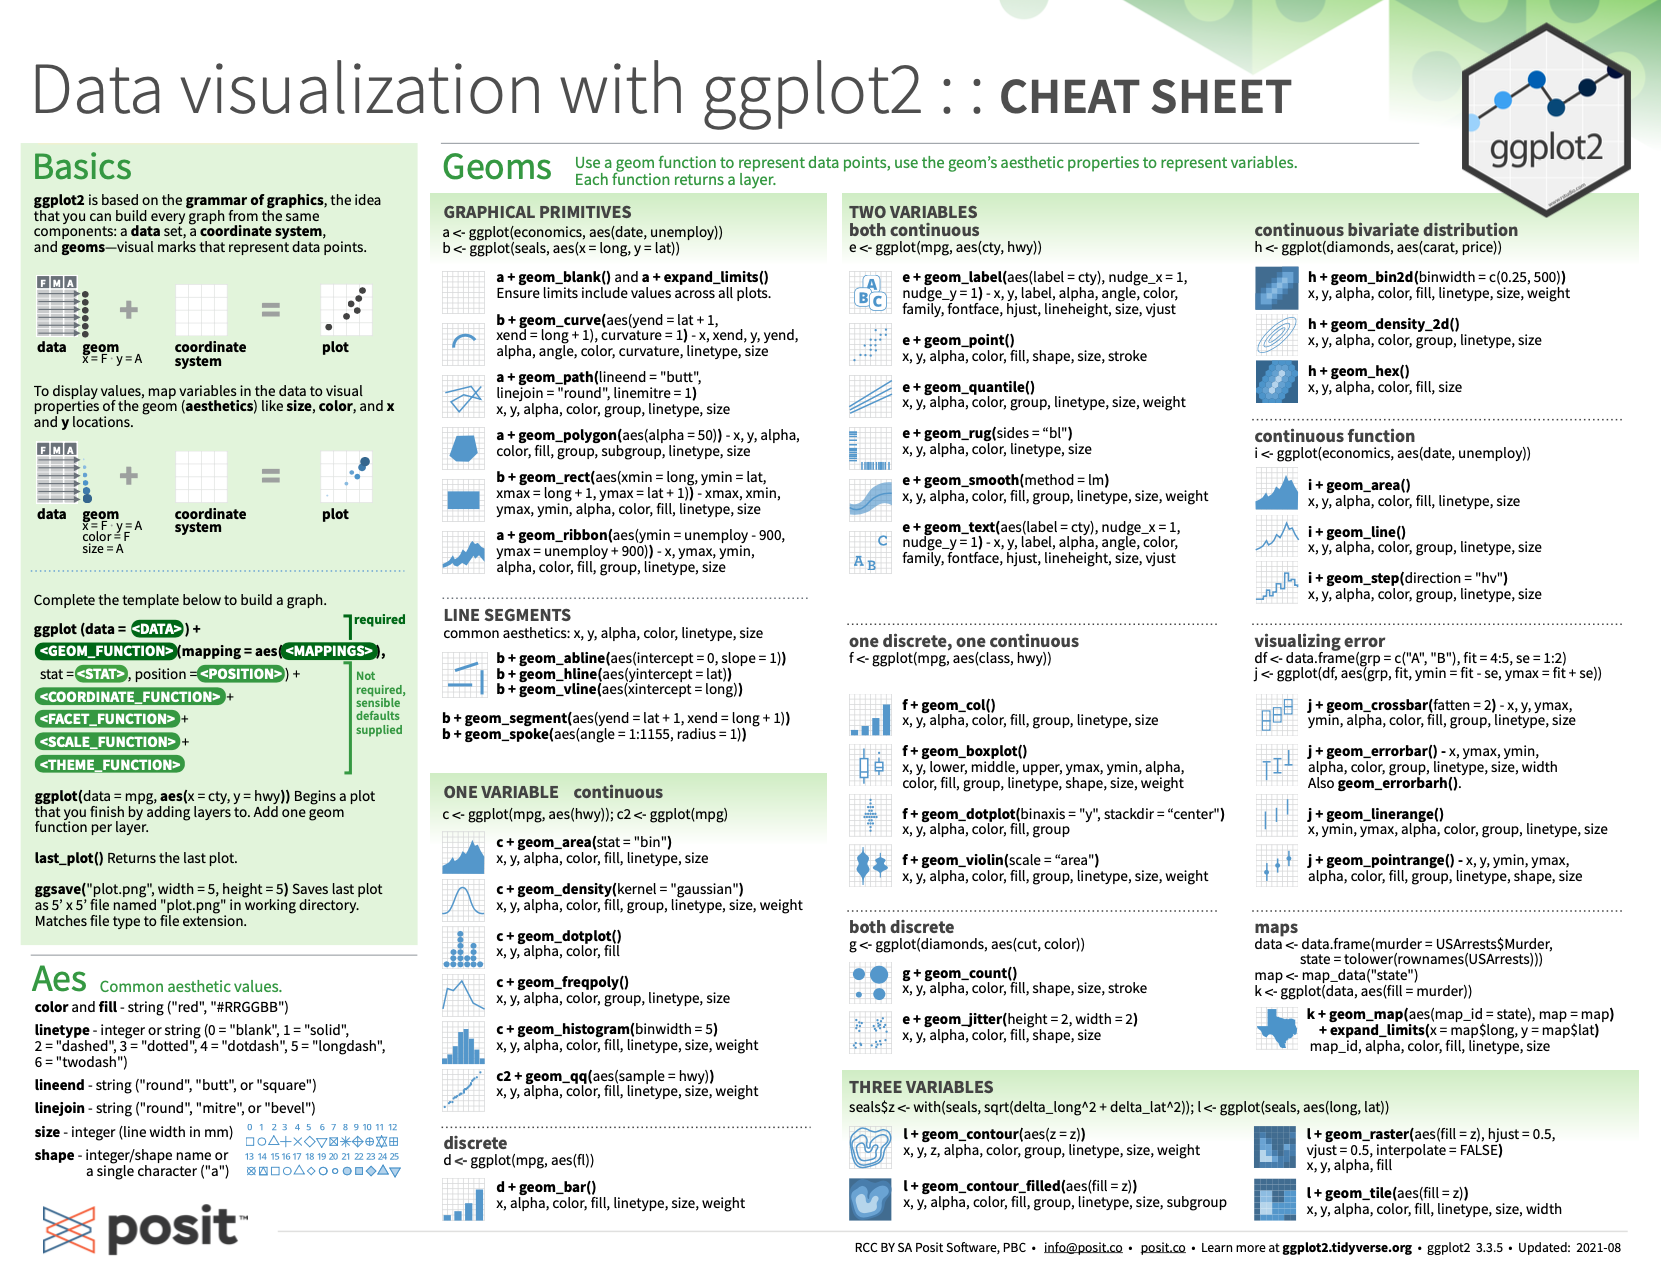 Data visualization with ggplot2 summary from RStudio cheatsheets.